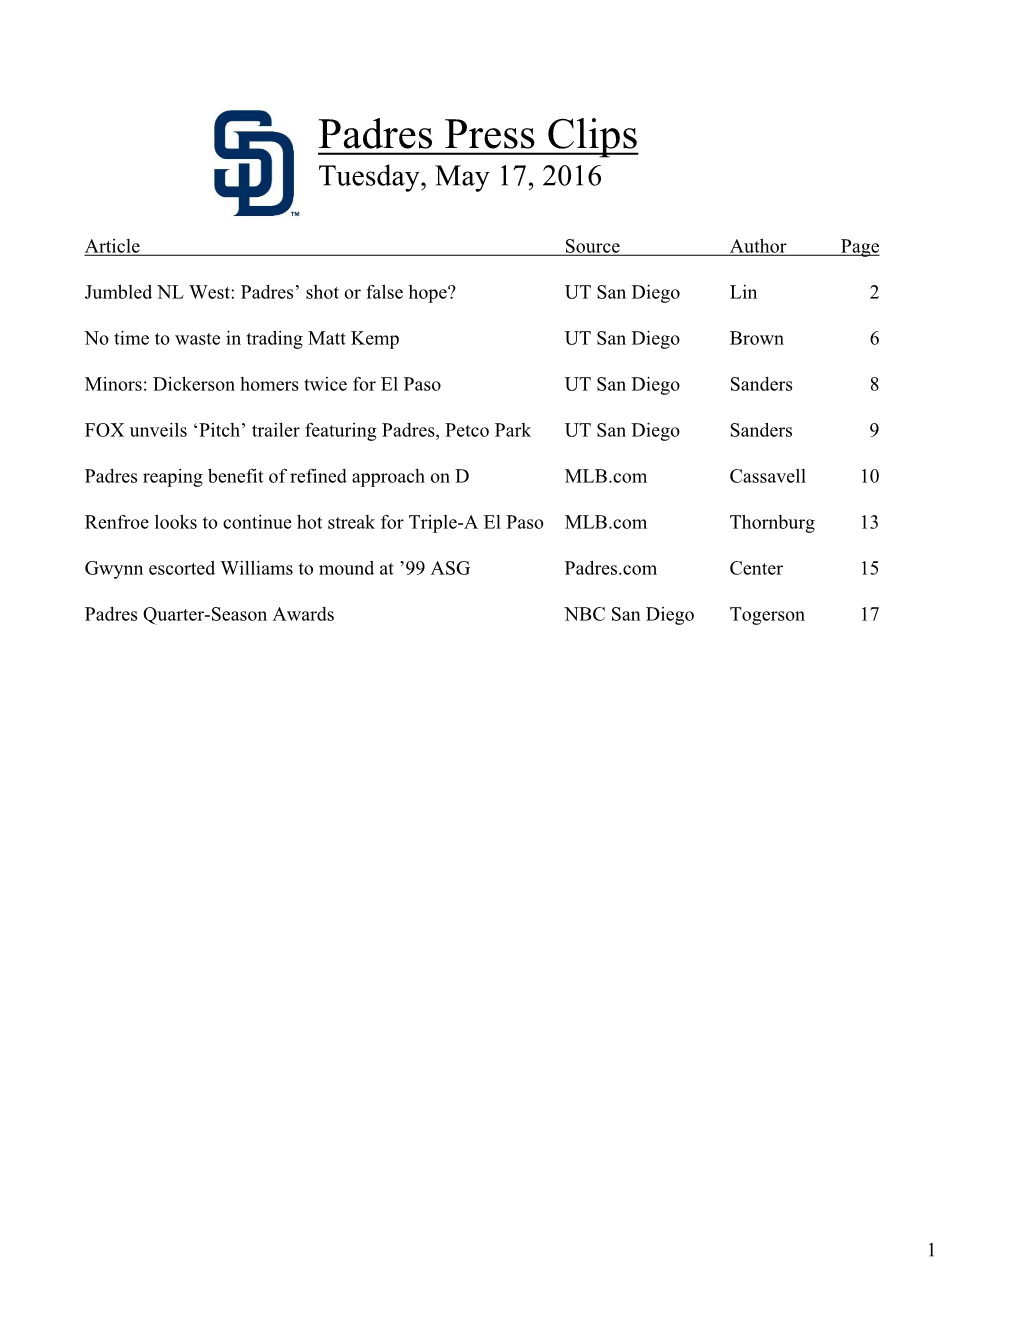 Padres Press Clips Tuesday, May 17, 2016